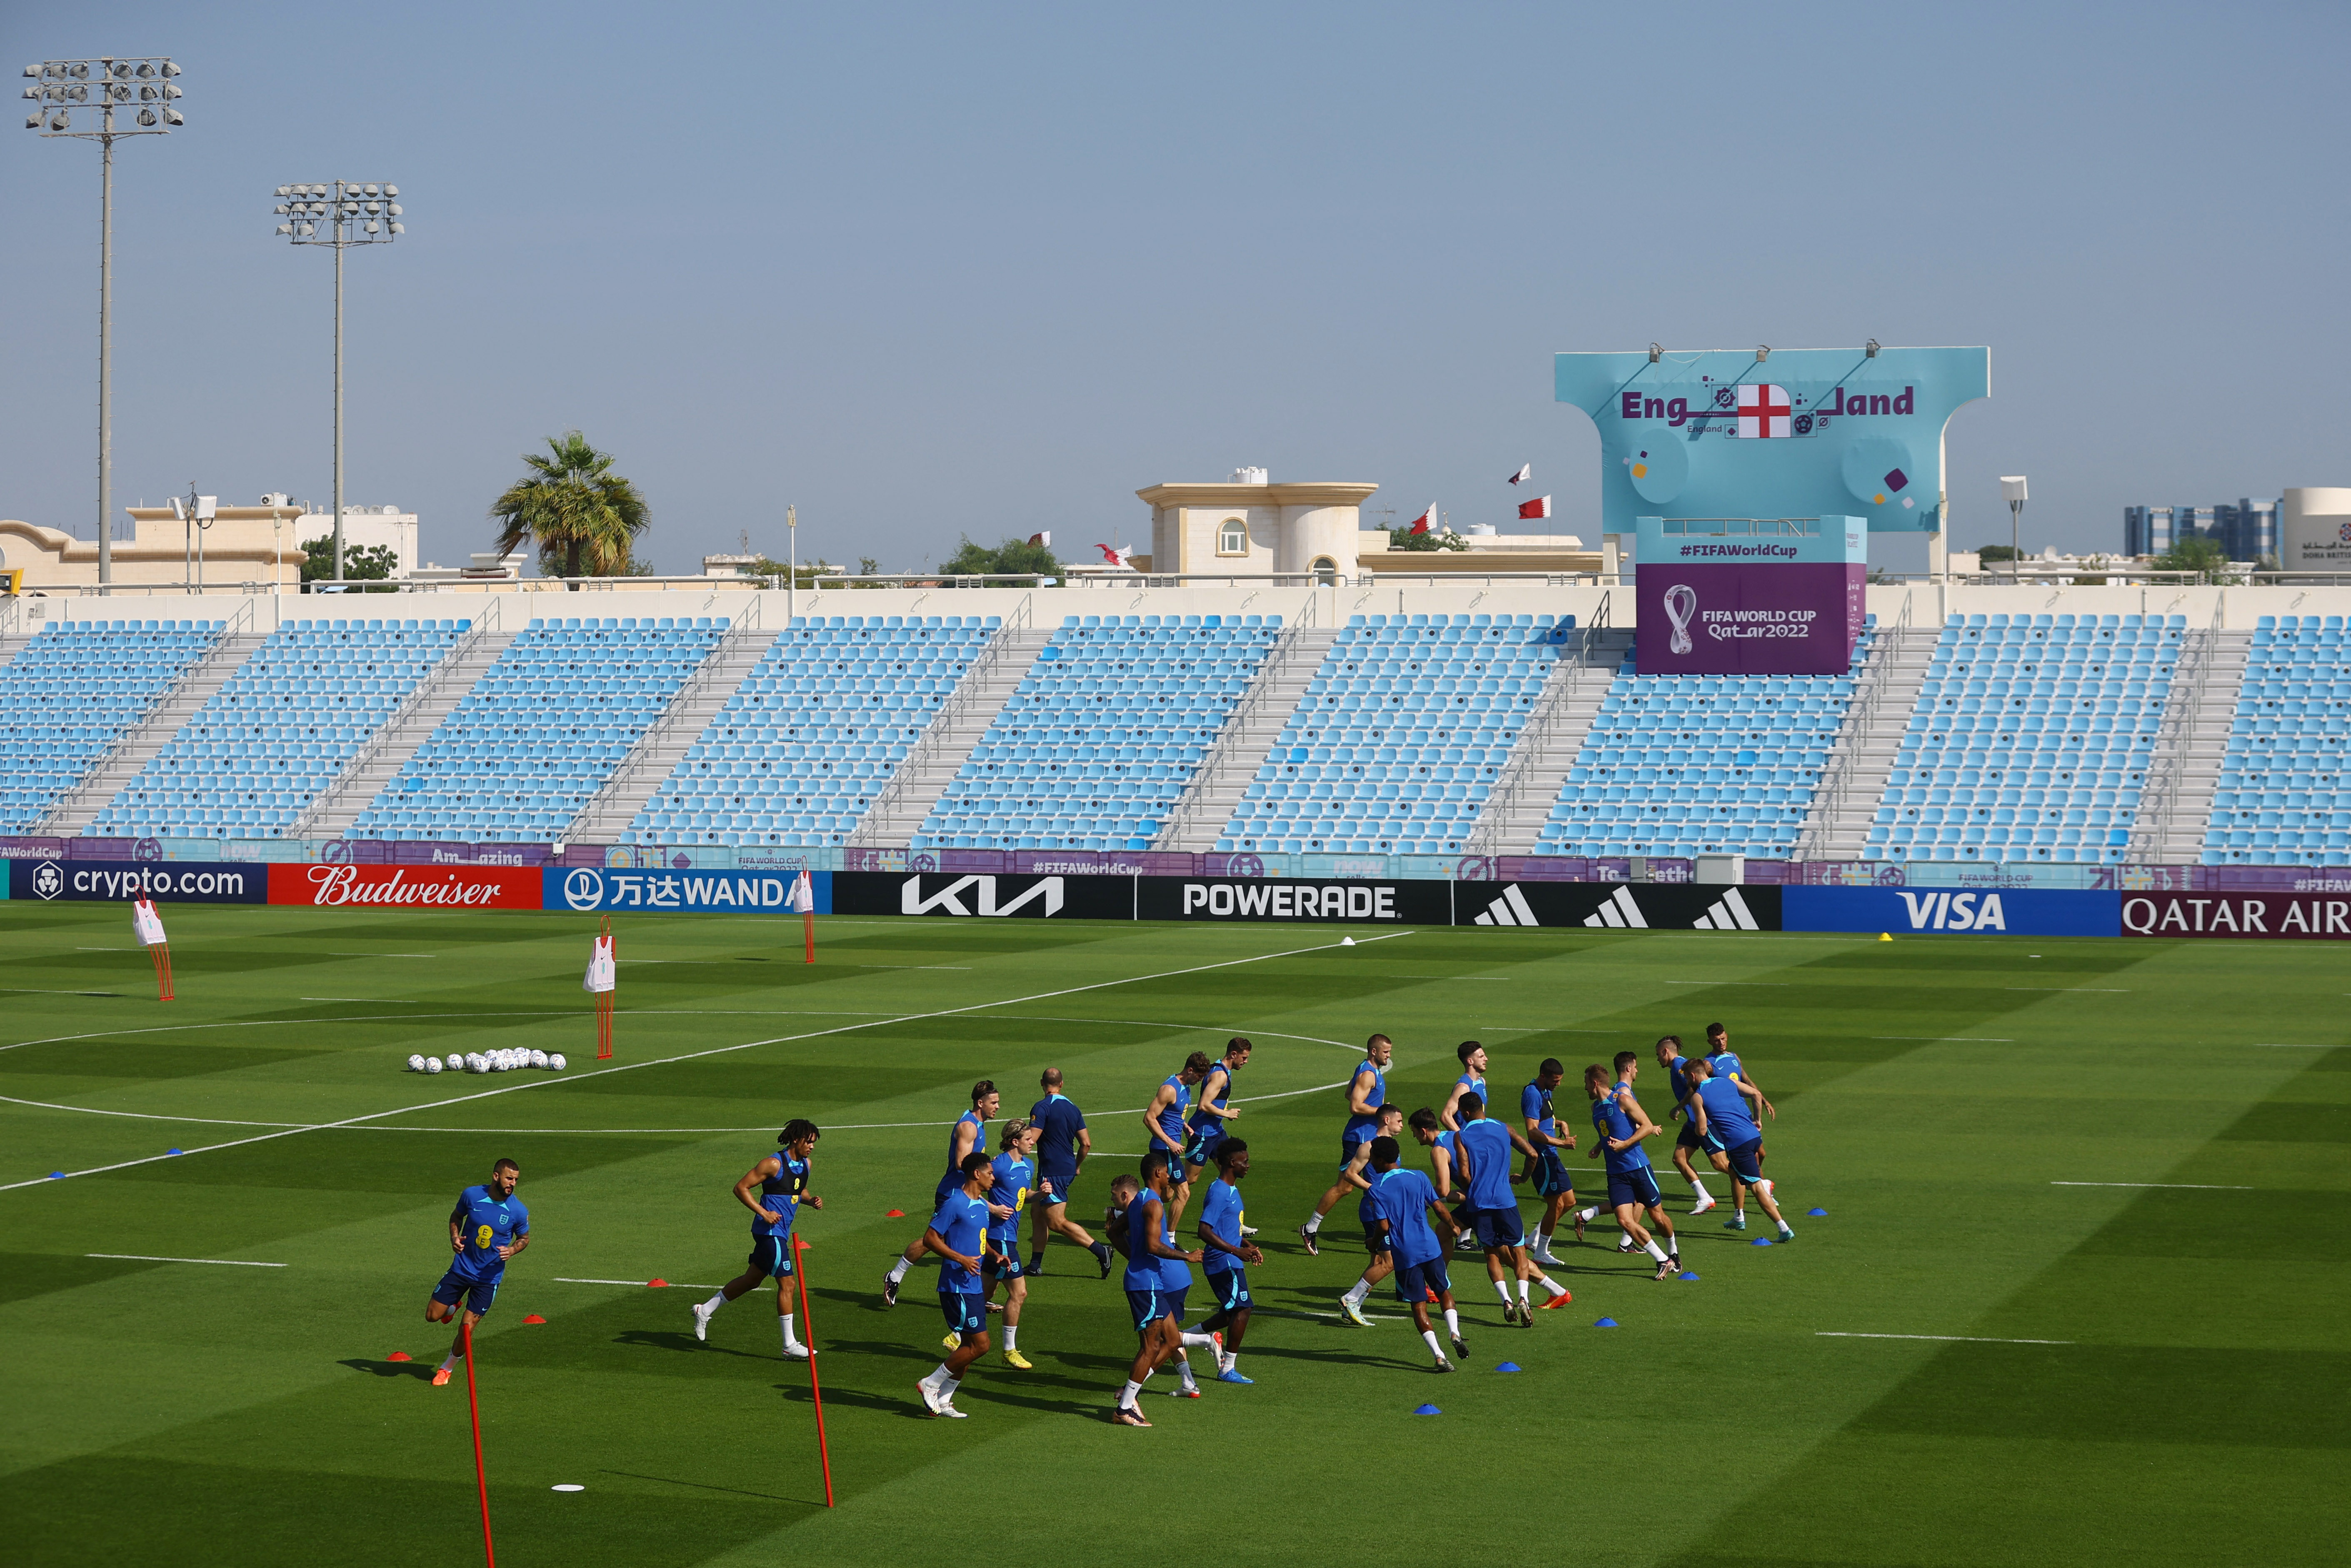 FIFA World Cup Qatar 2022 - England Training